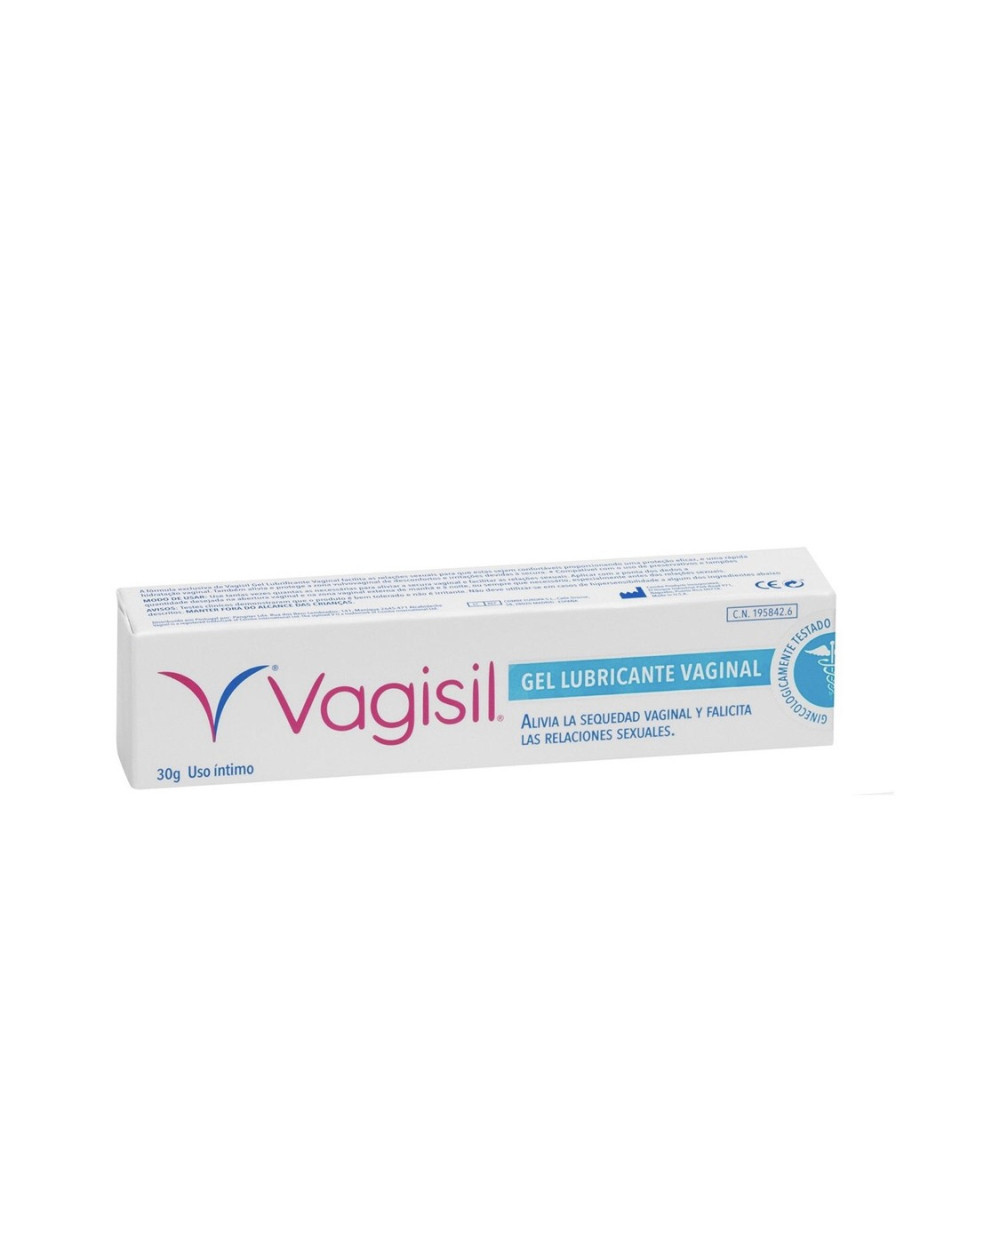 Vagisil gel lubricante vaginal 50g